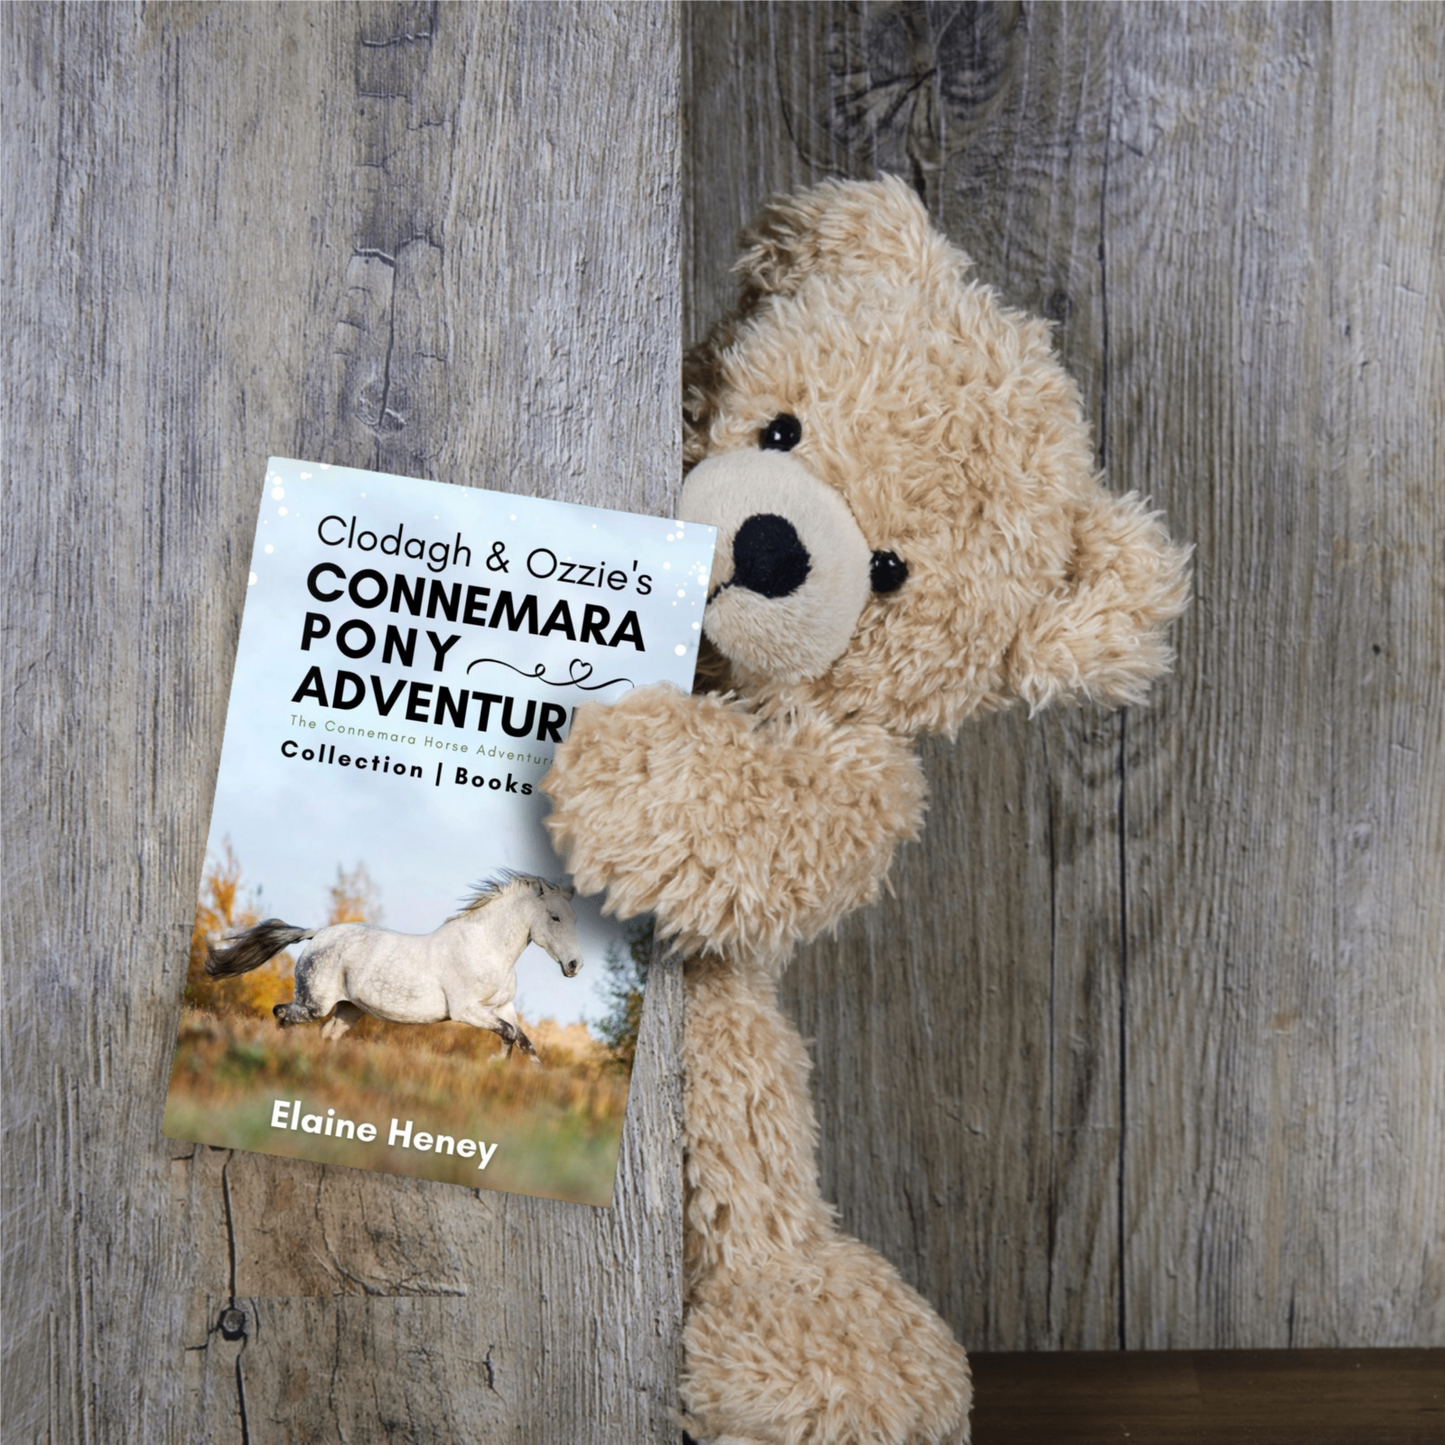 Clodagh & Ozzie's Connemara Pony Adventures | The Connemara Horse Adventures Series Collection - Books 4 to 6